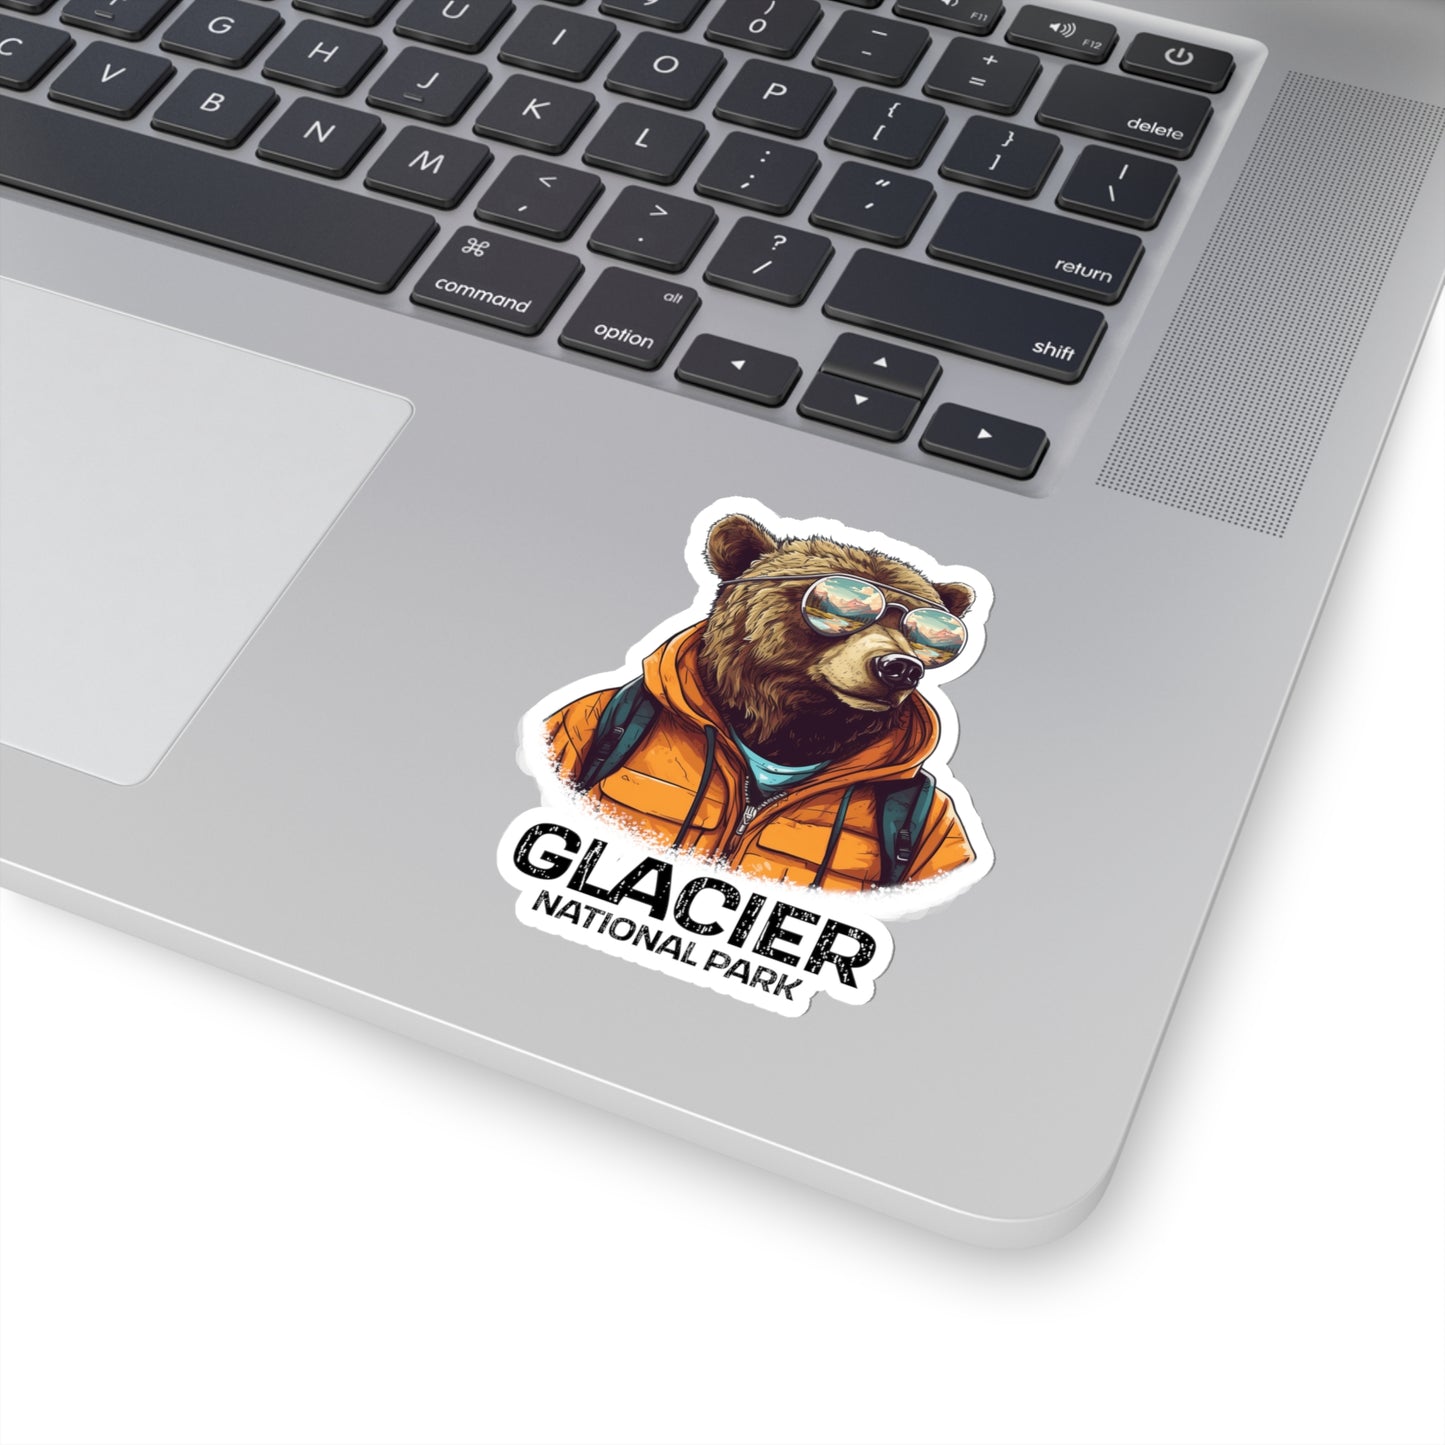 Glacier National Park Sticker - Grizzly Bear